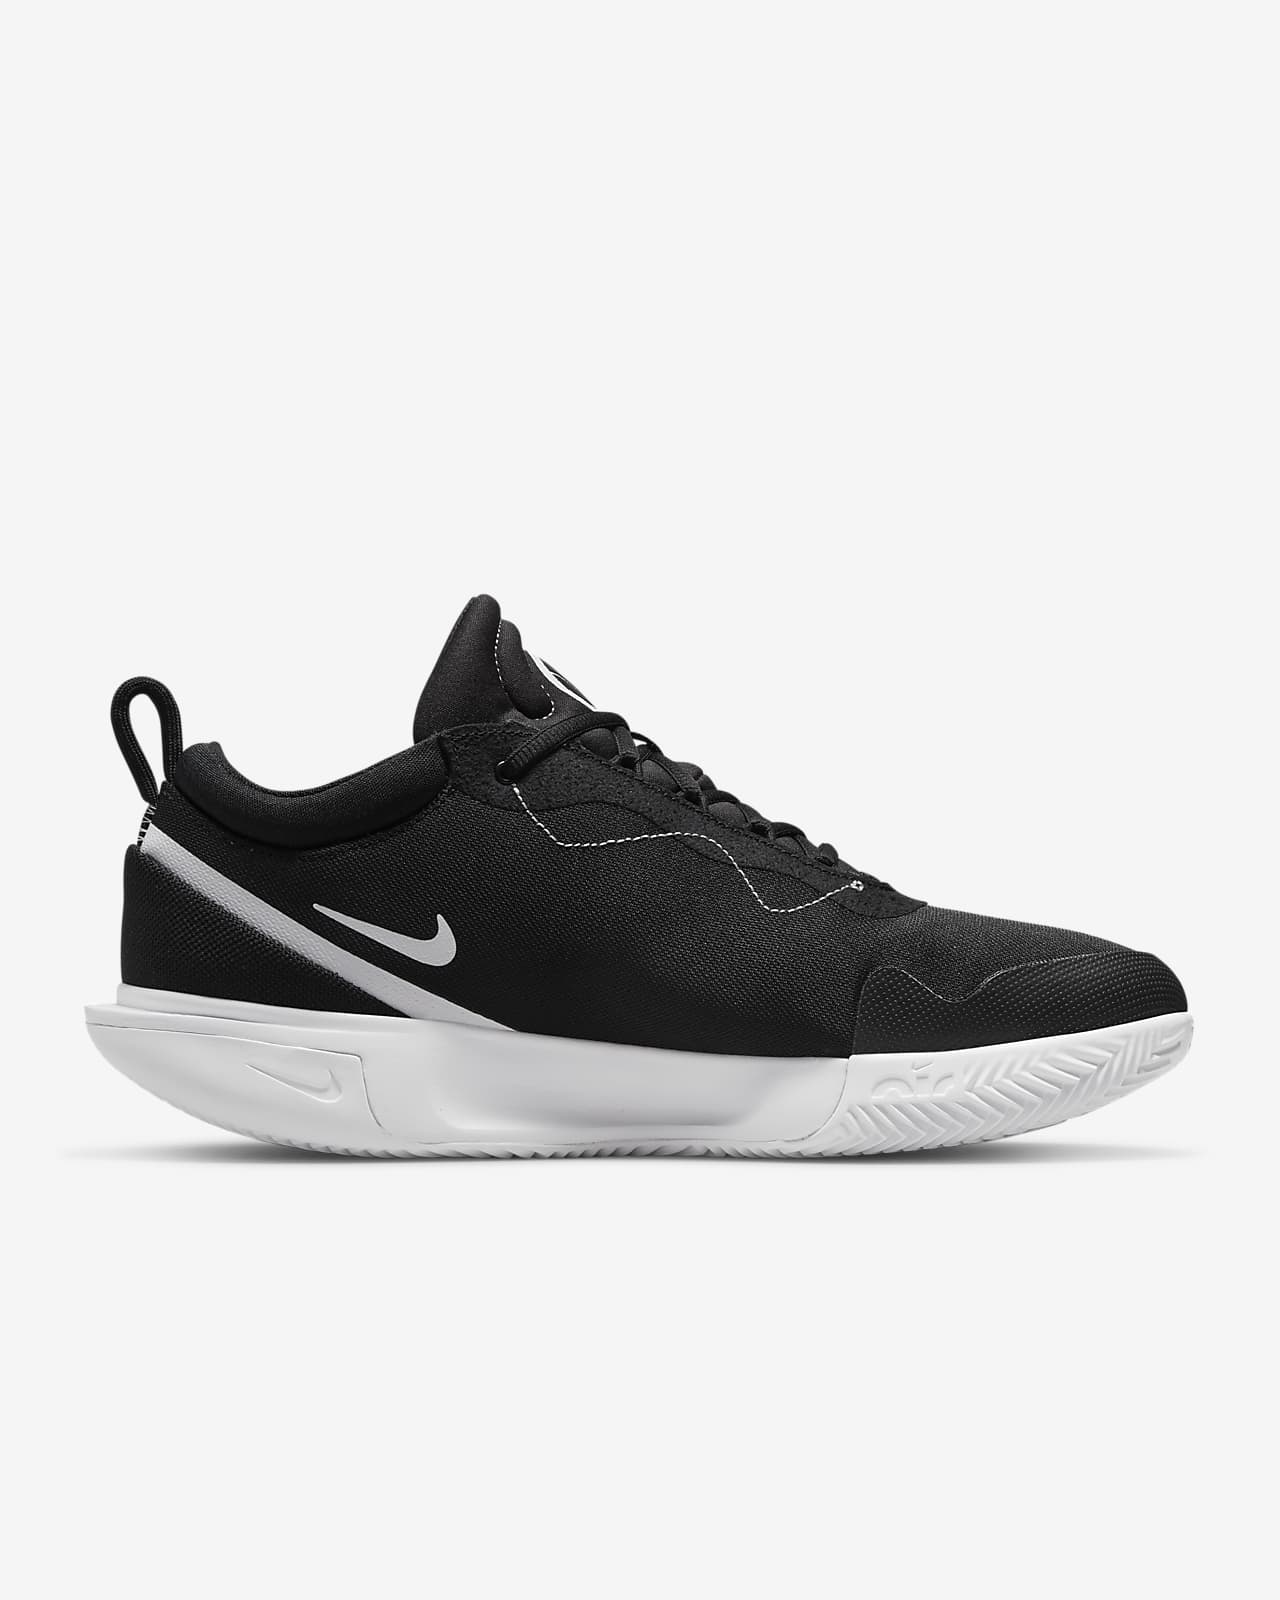 NikeCourt Zoom Pro Zapatillas de tenis tierra - Hombre. Nike